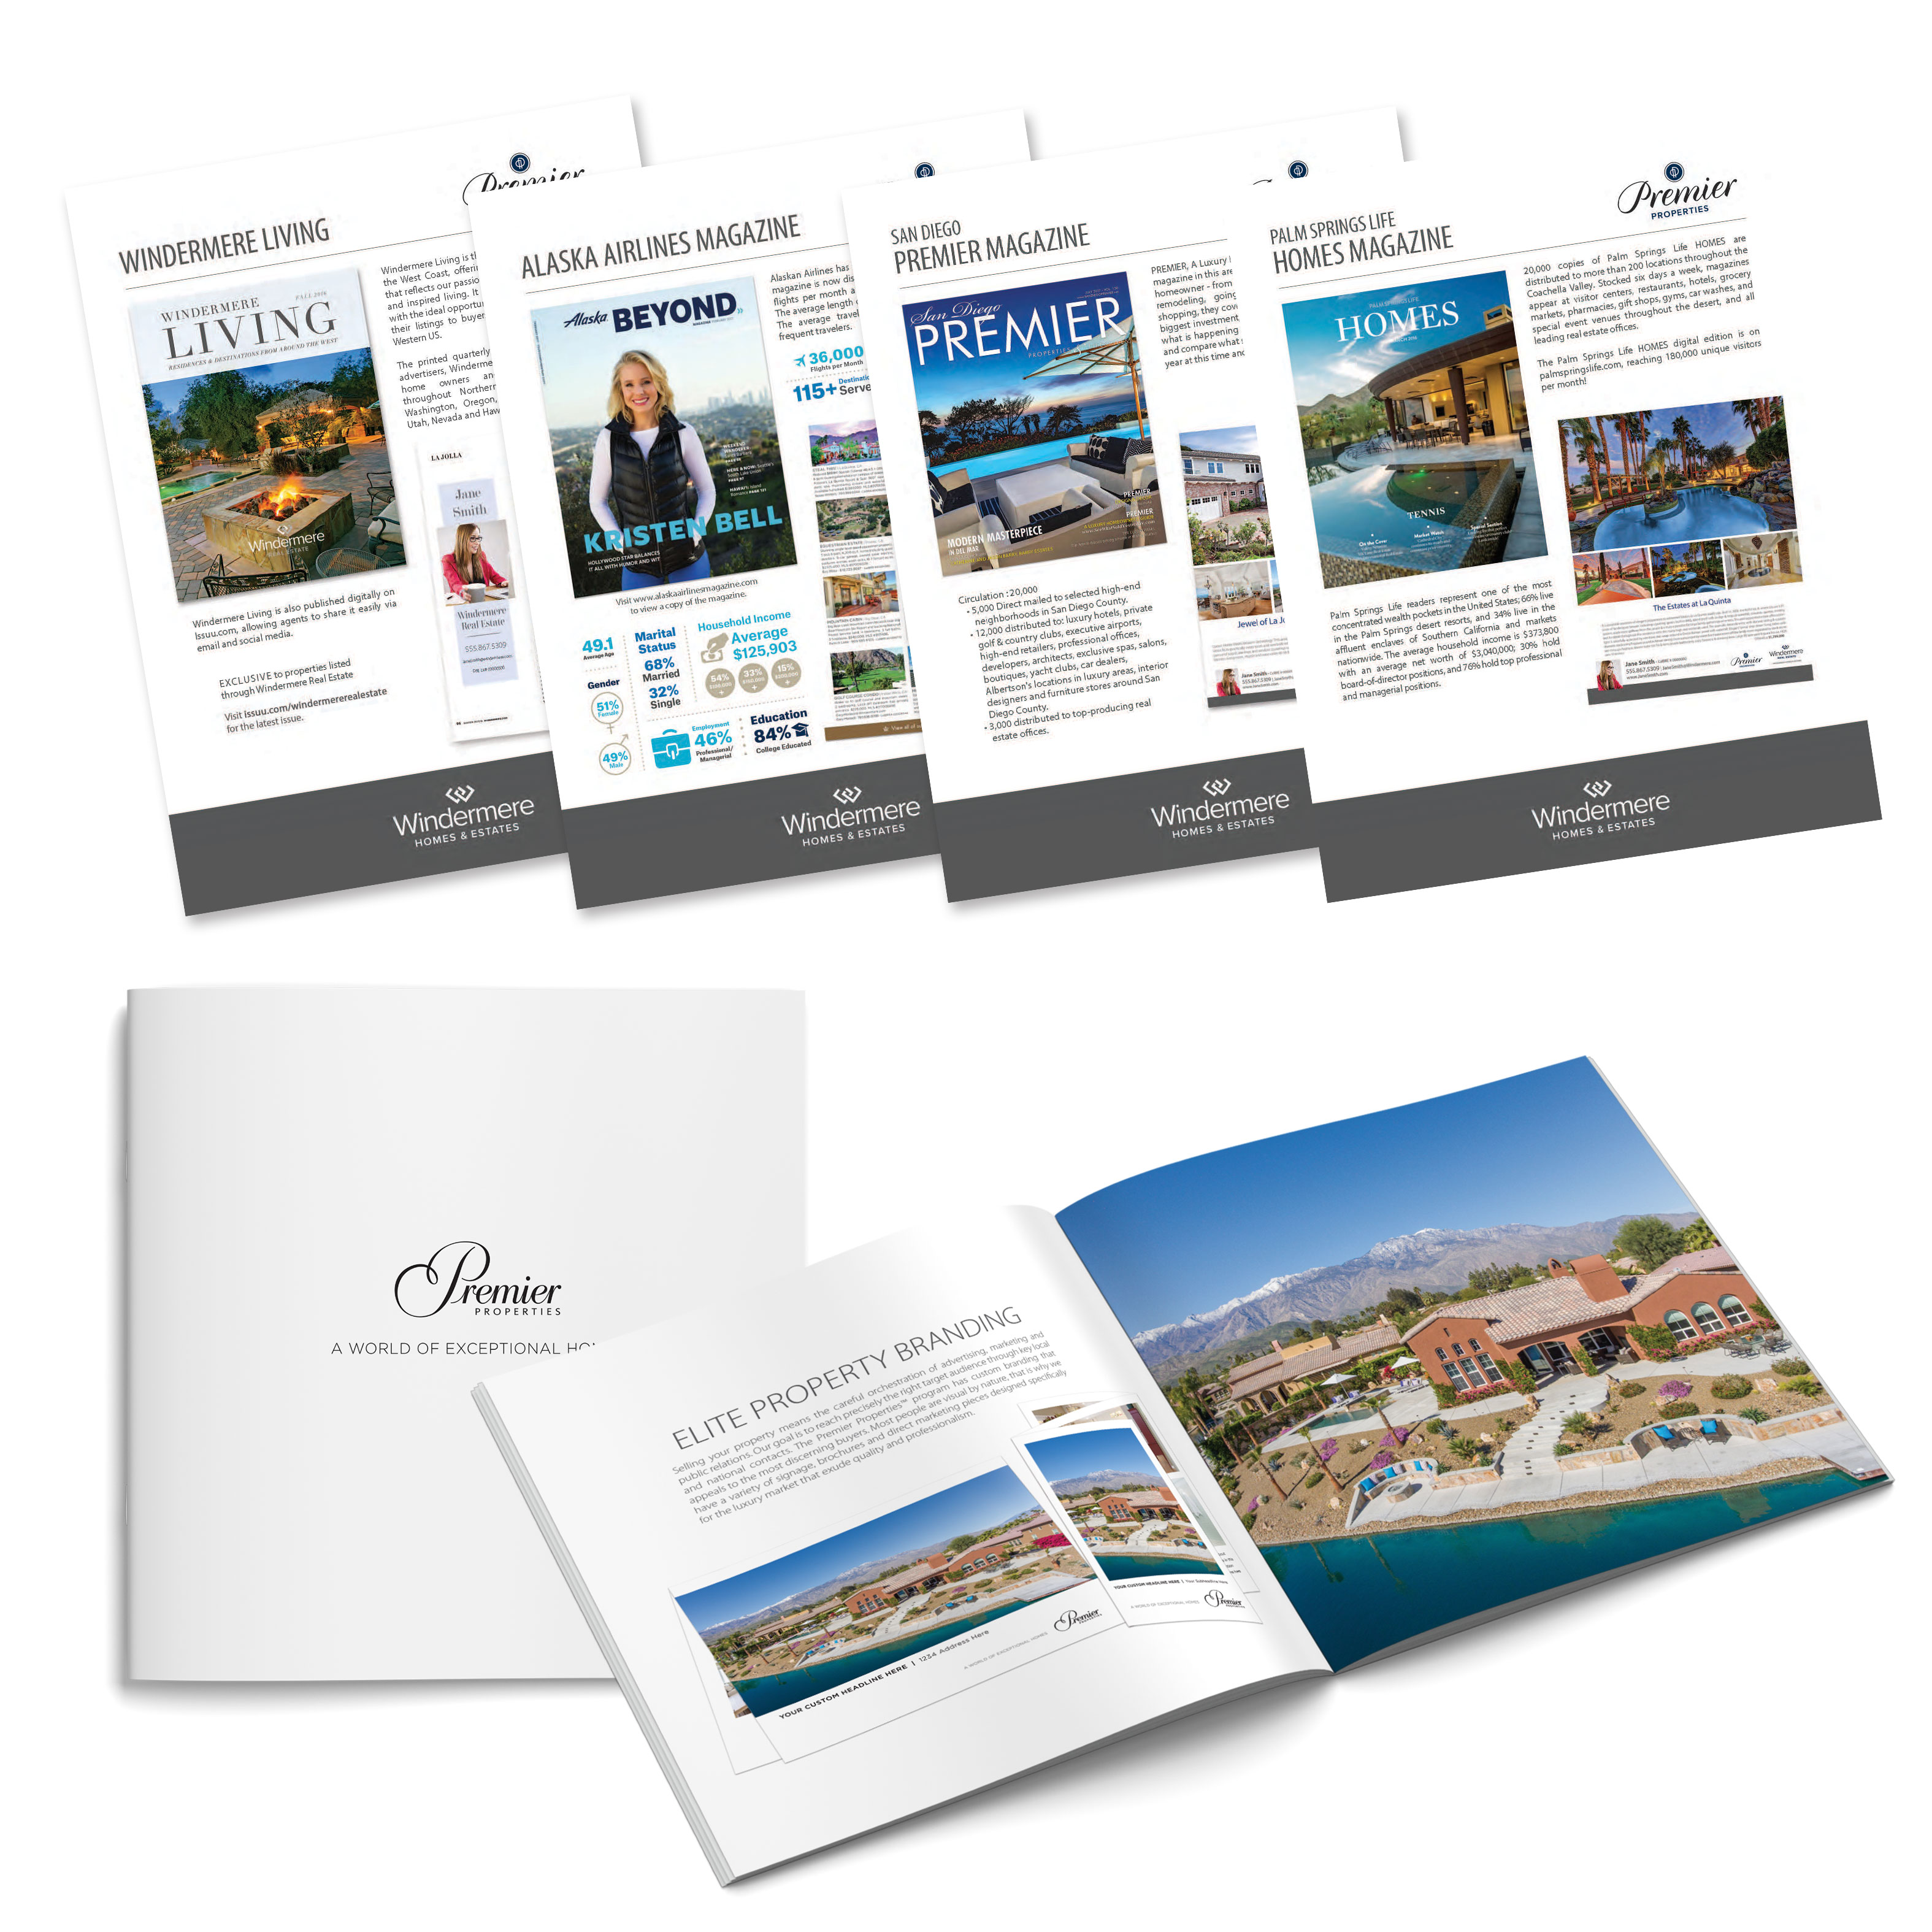 BRANDING for Windermere Real Estate's Premier Properties listing presentation showing ad media pages and booklet brochure design.